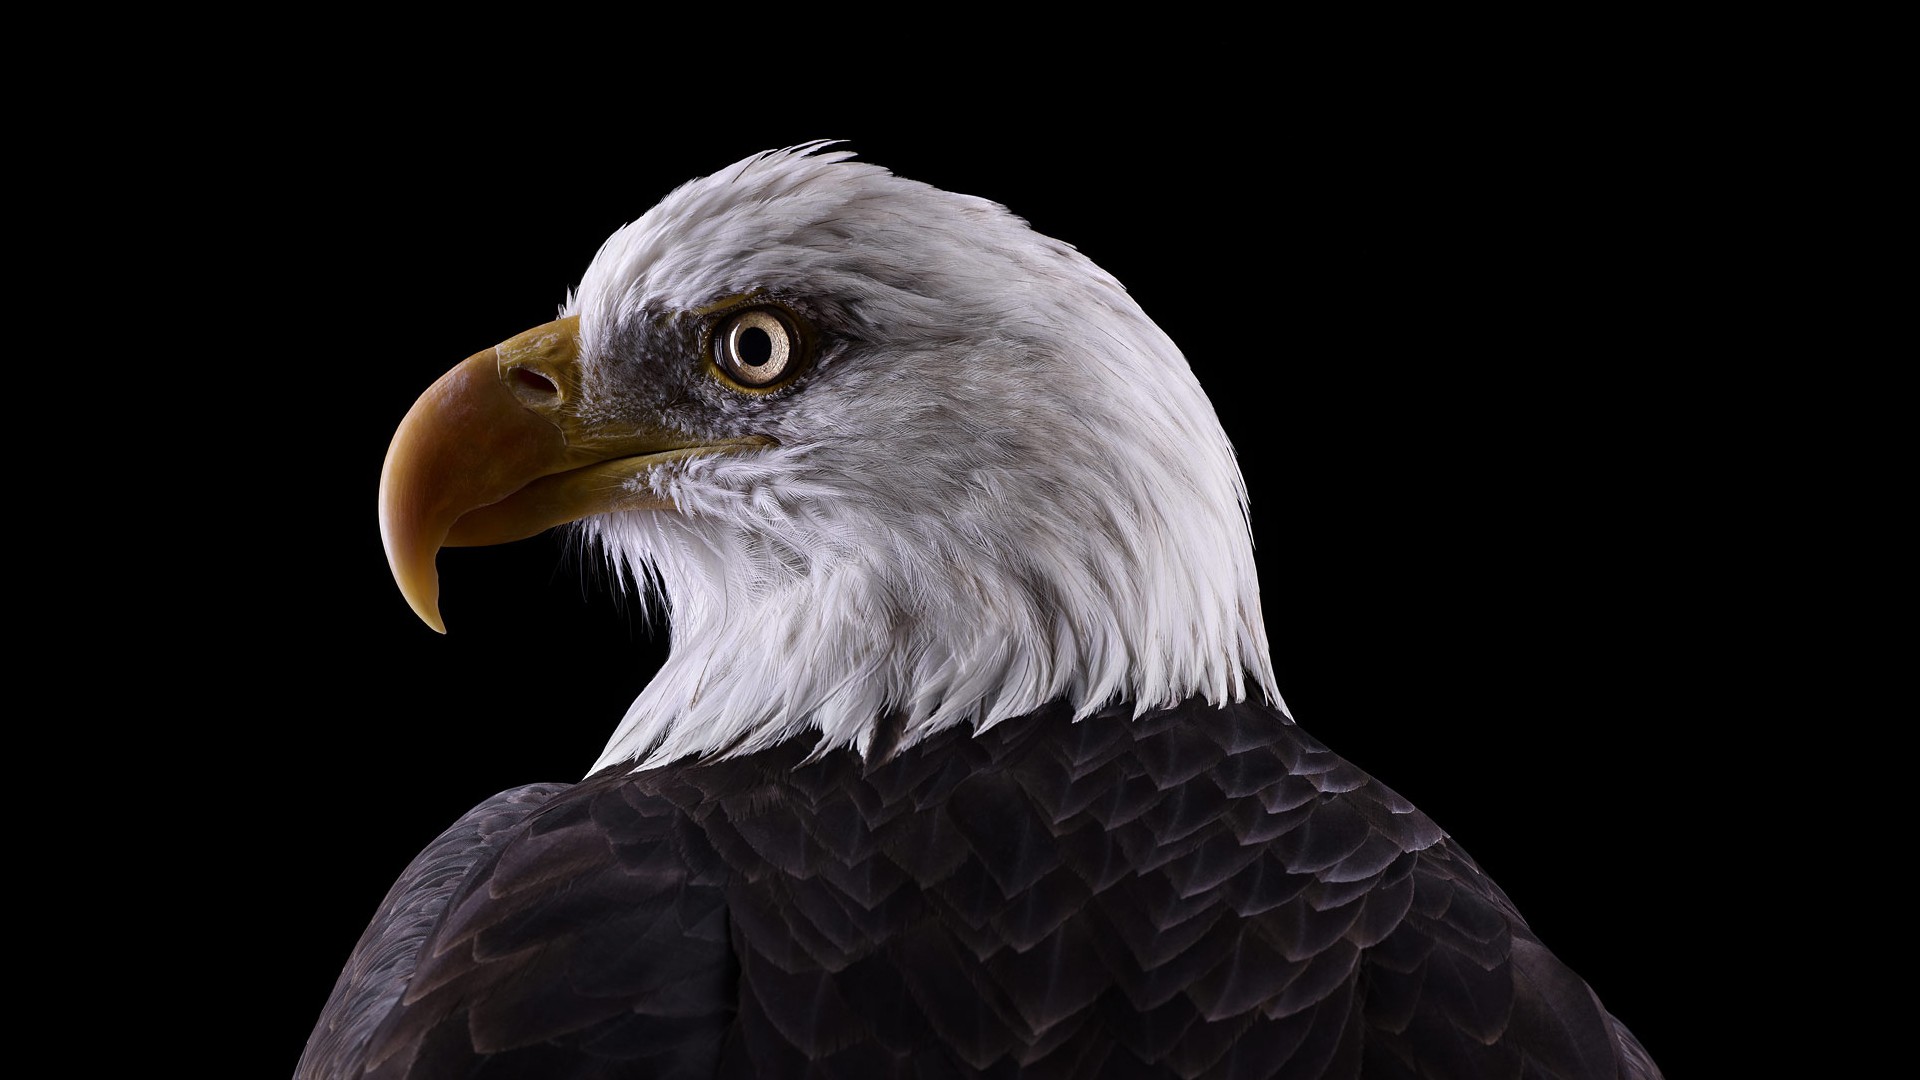 General 1920x1080 photography animals birds simple background eagle nature bald eagle black background